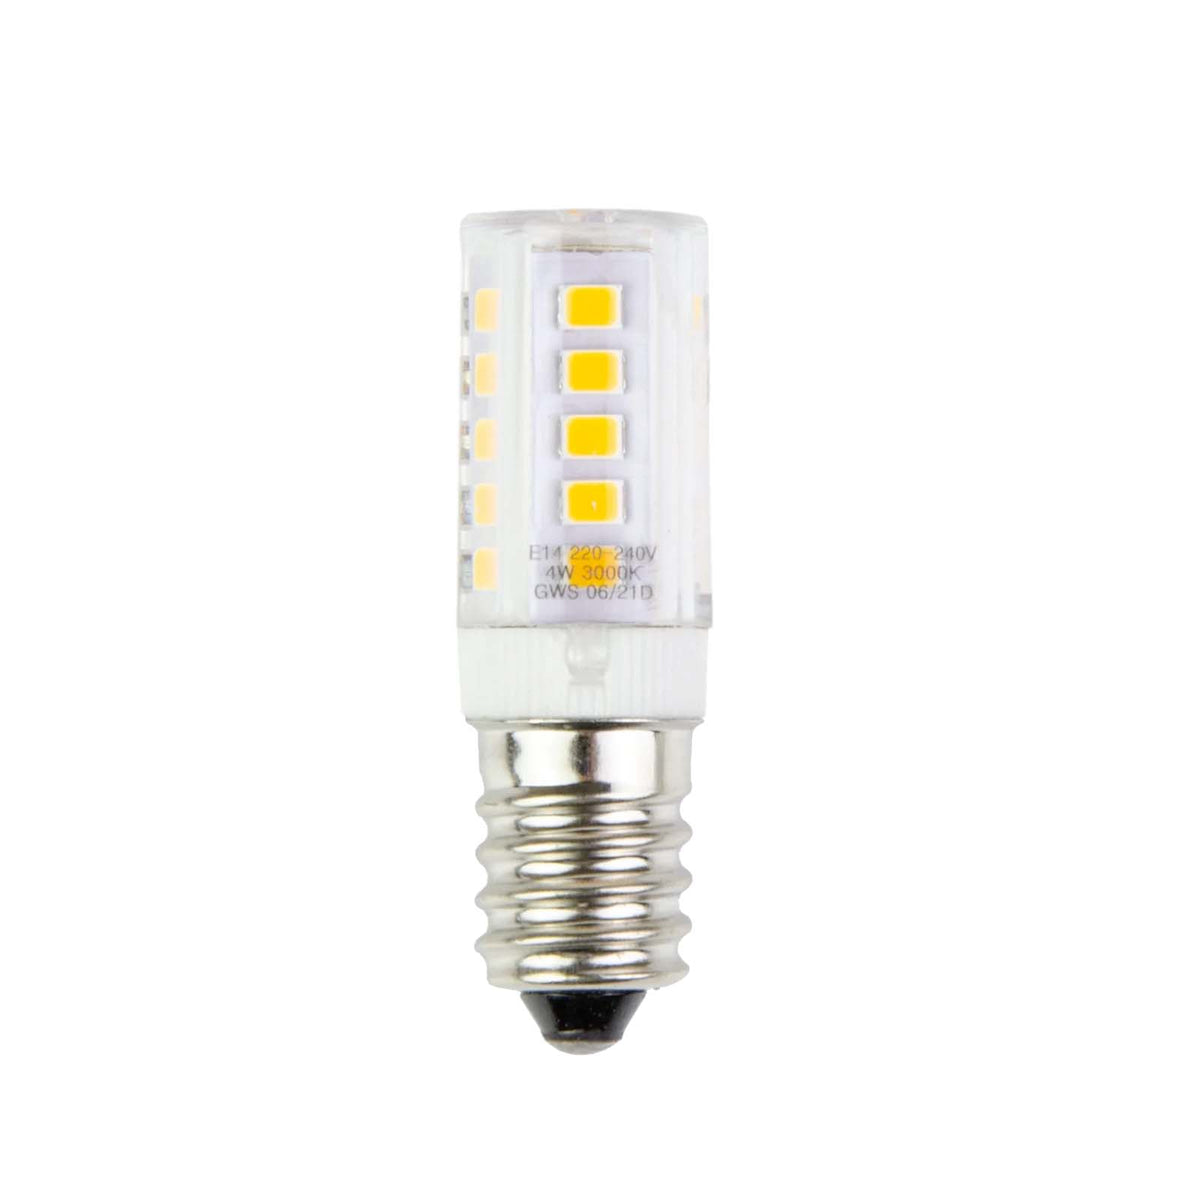 G.W.S LED Wholesale LED Bulbs E14 4W Small Edison Screw LED Capsule Light Bulb